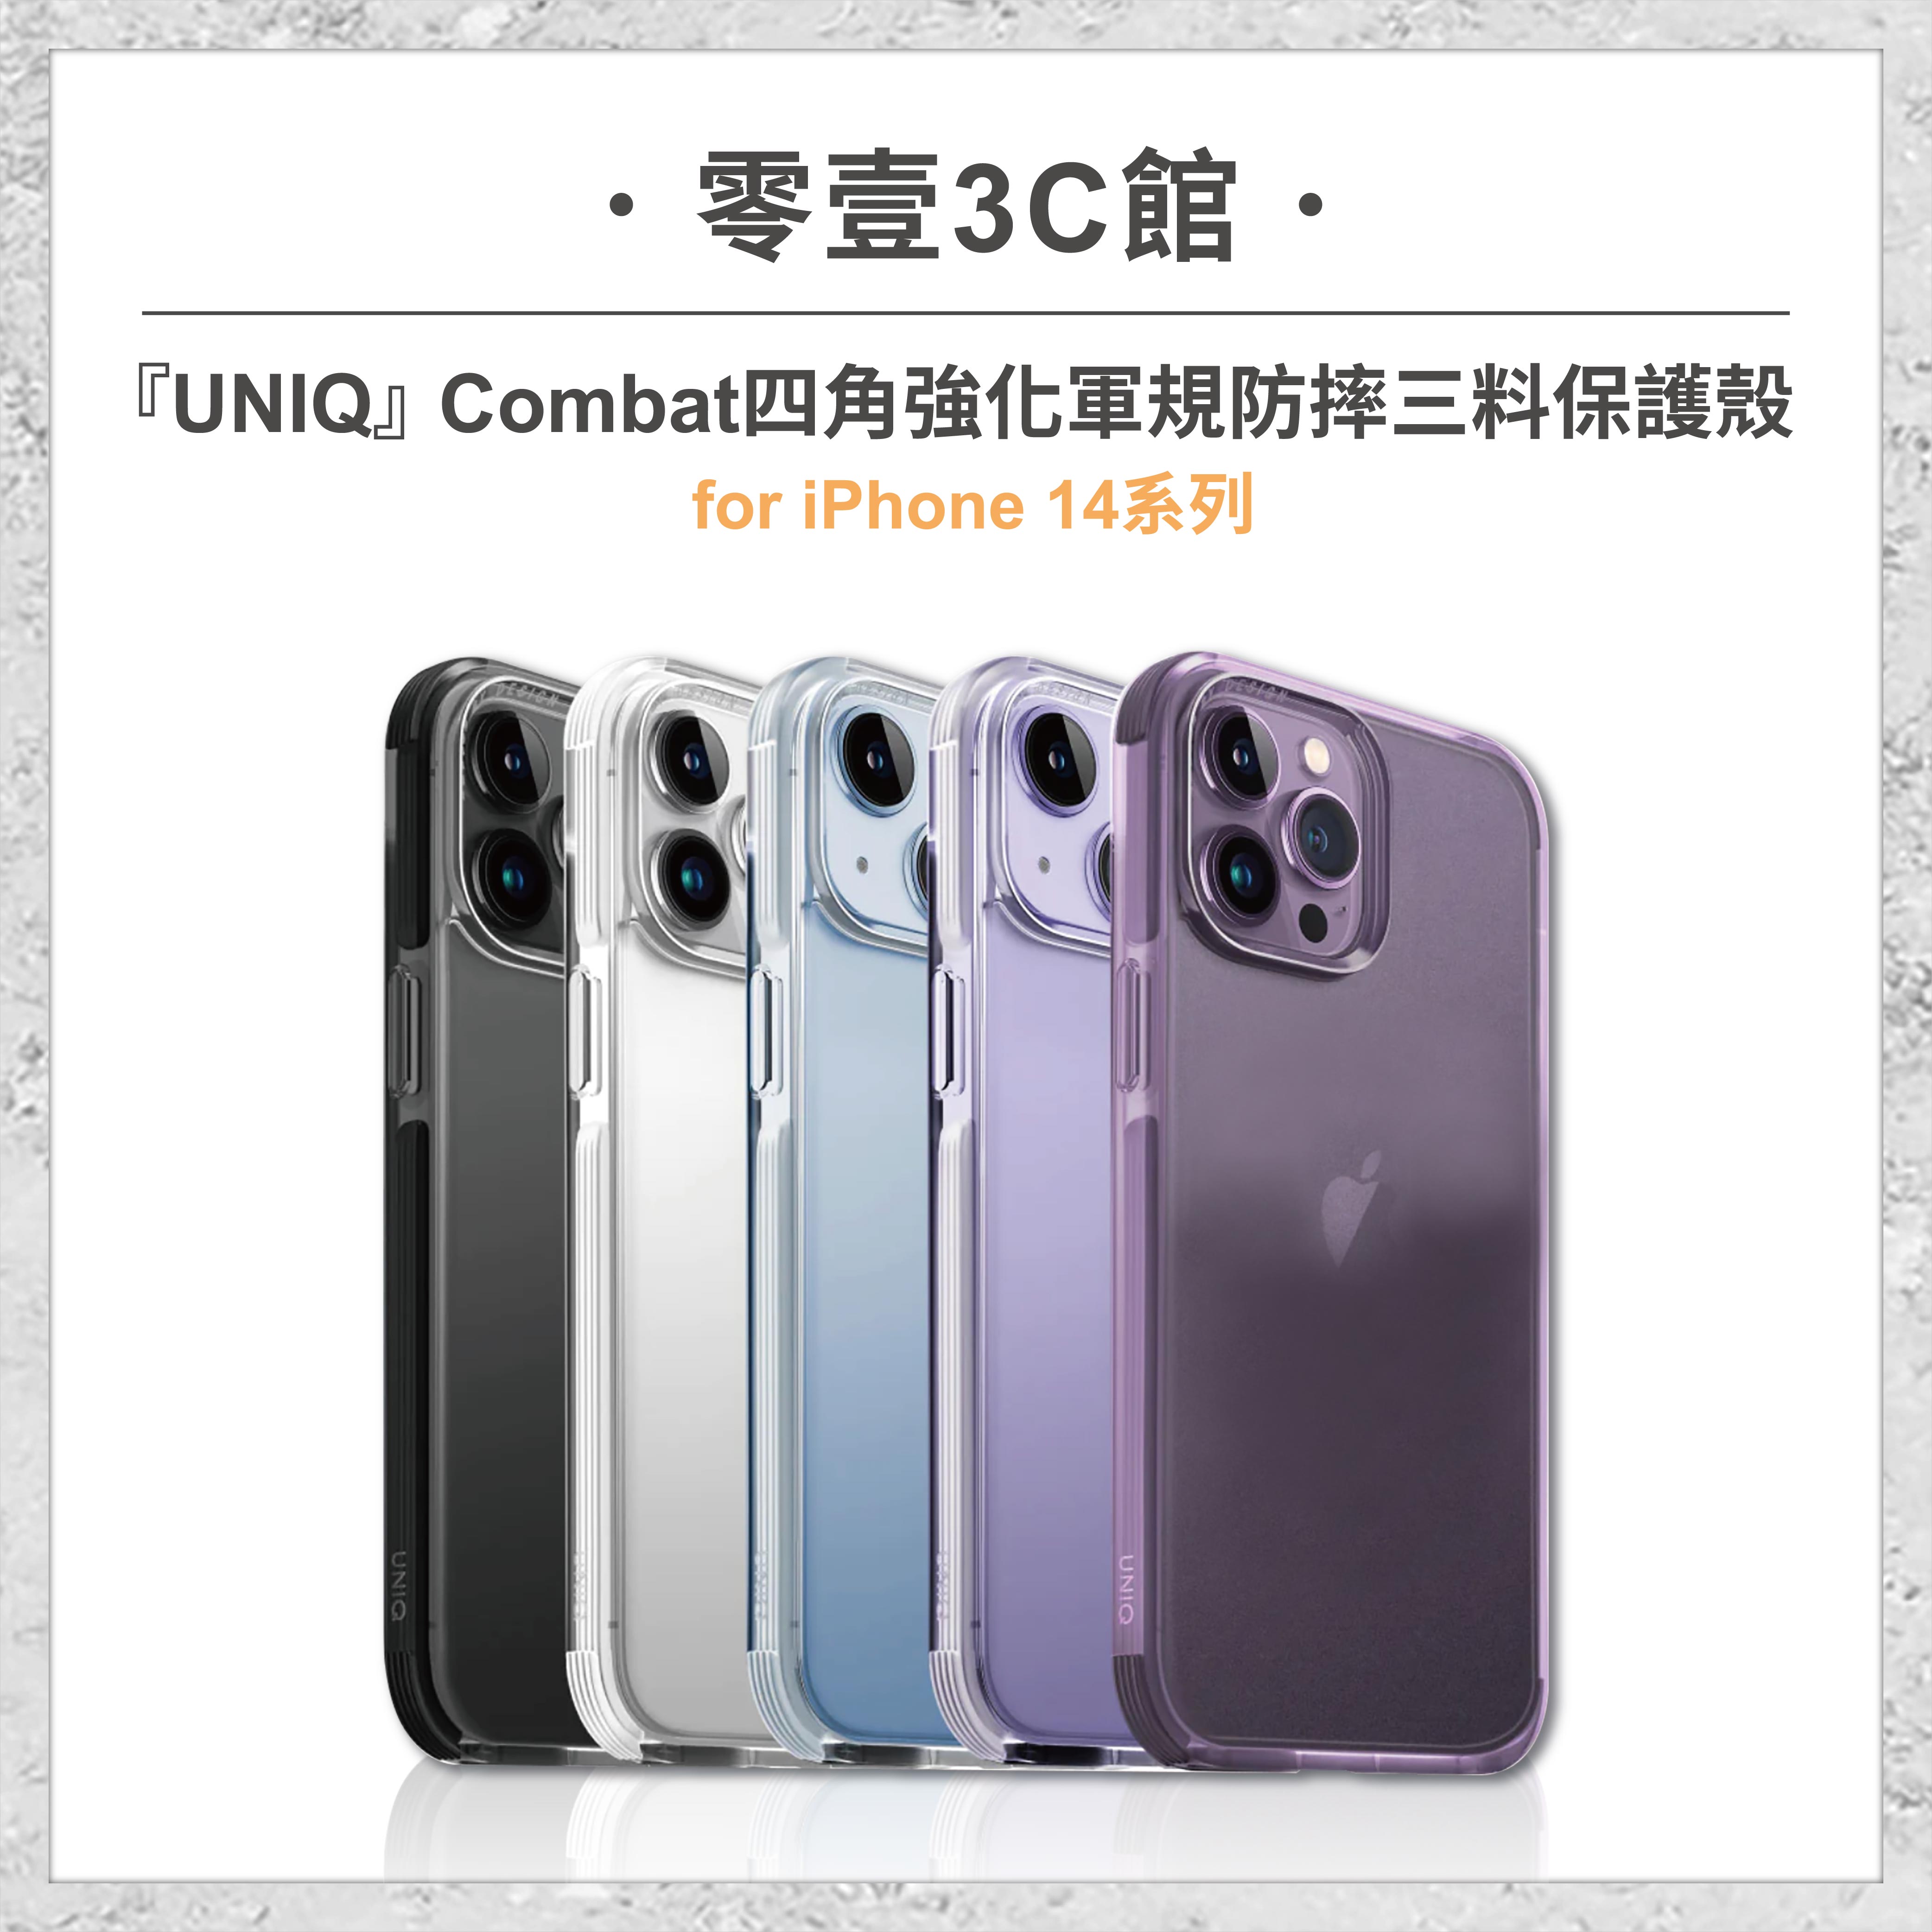 『UNIQ』Combat 四角強化軍規等級防摔三料保護殼 for iPhone14系列 14 14 Plus 14 Pro 14 Pro Max 防摔殼 手機殼